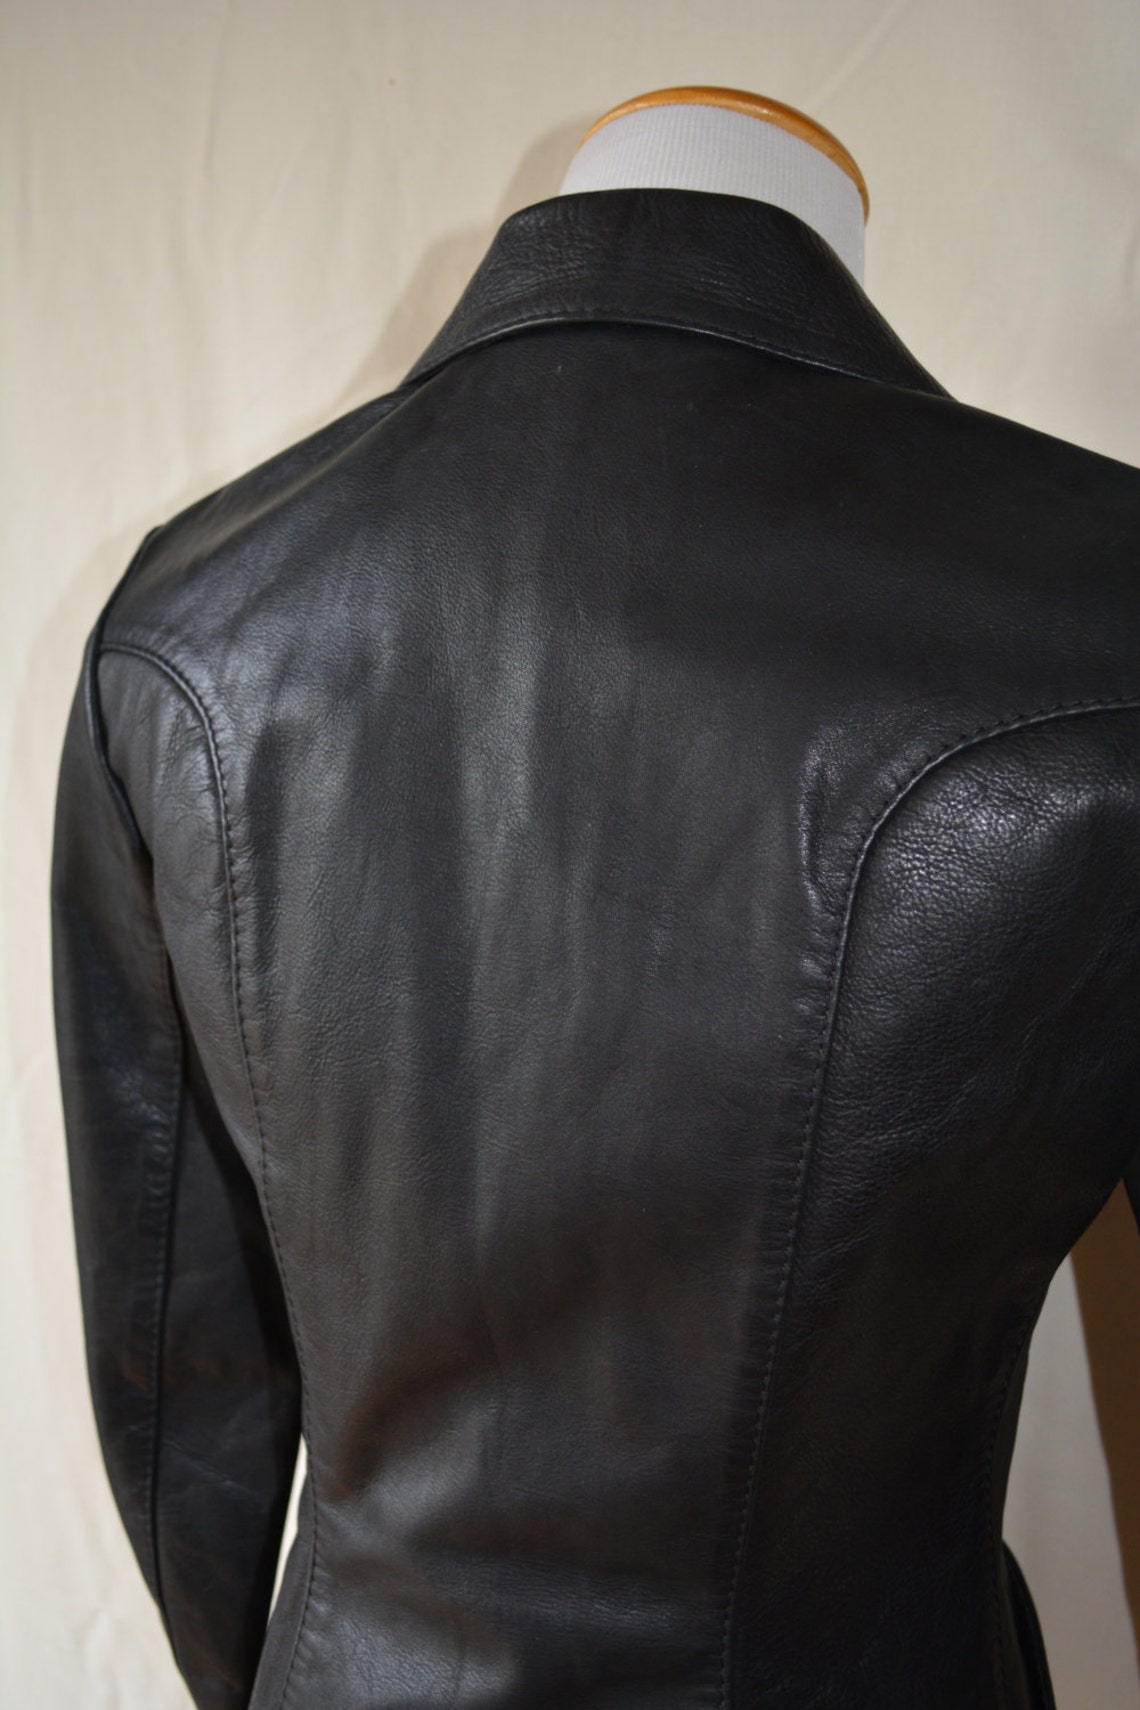 GLASSWATER vintage 70's black leather jacket XS/S | Etsy